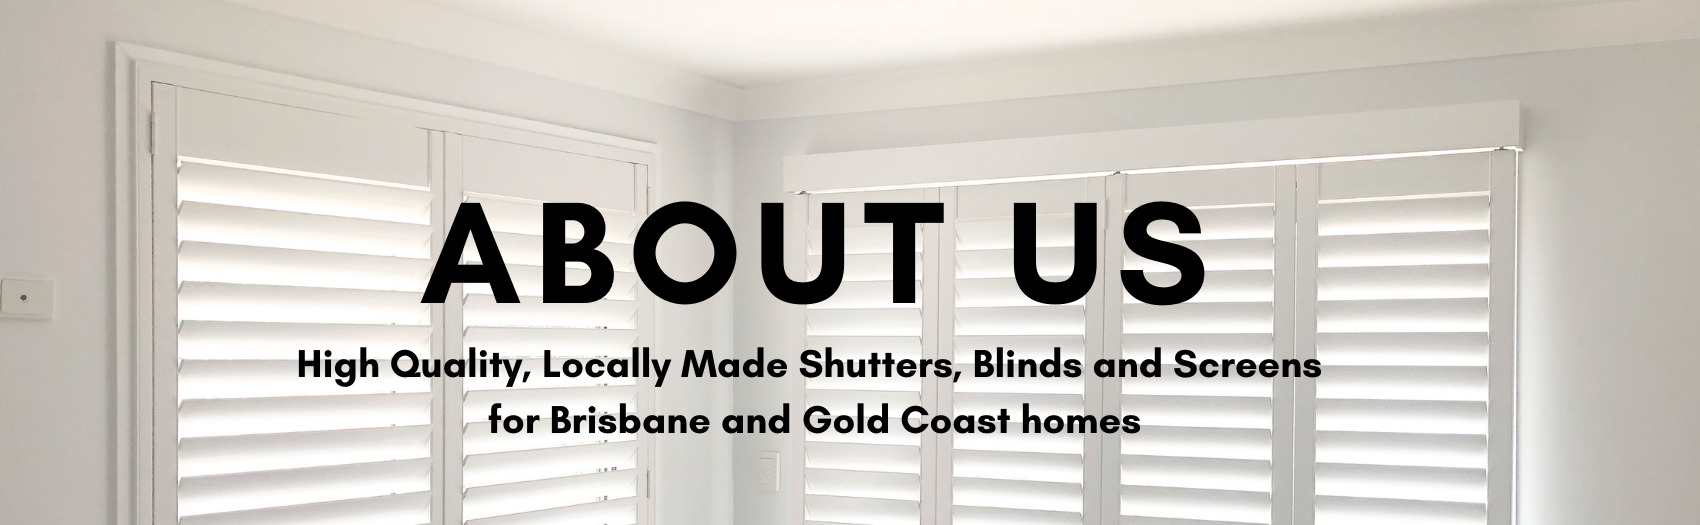 decor blinds brisbane gold coast shutter and blinds